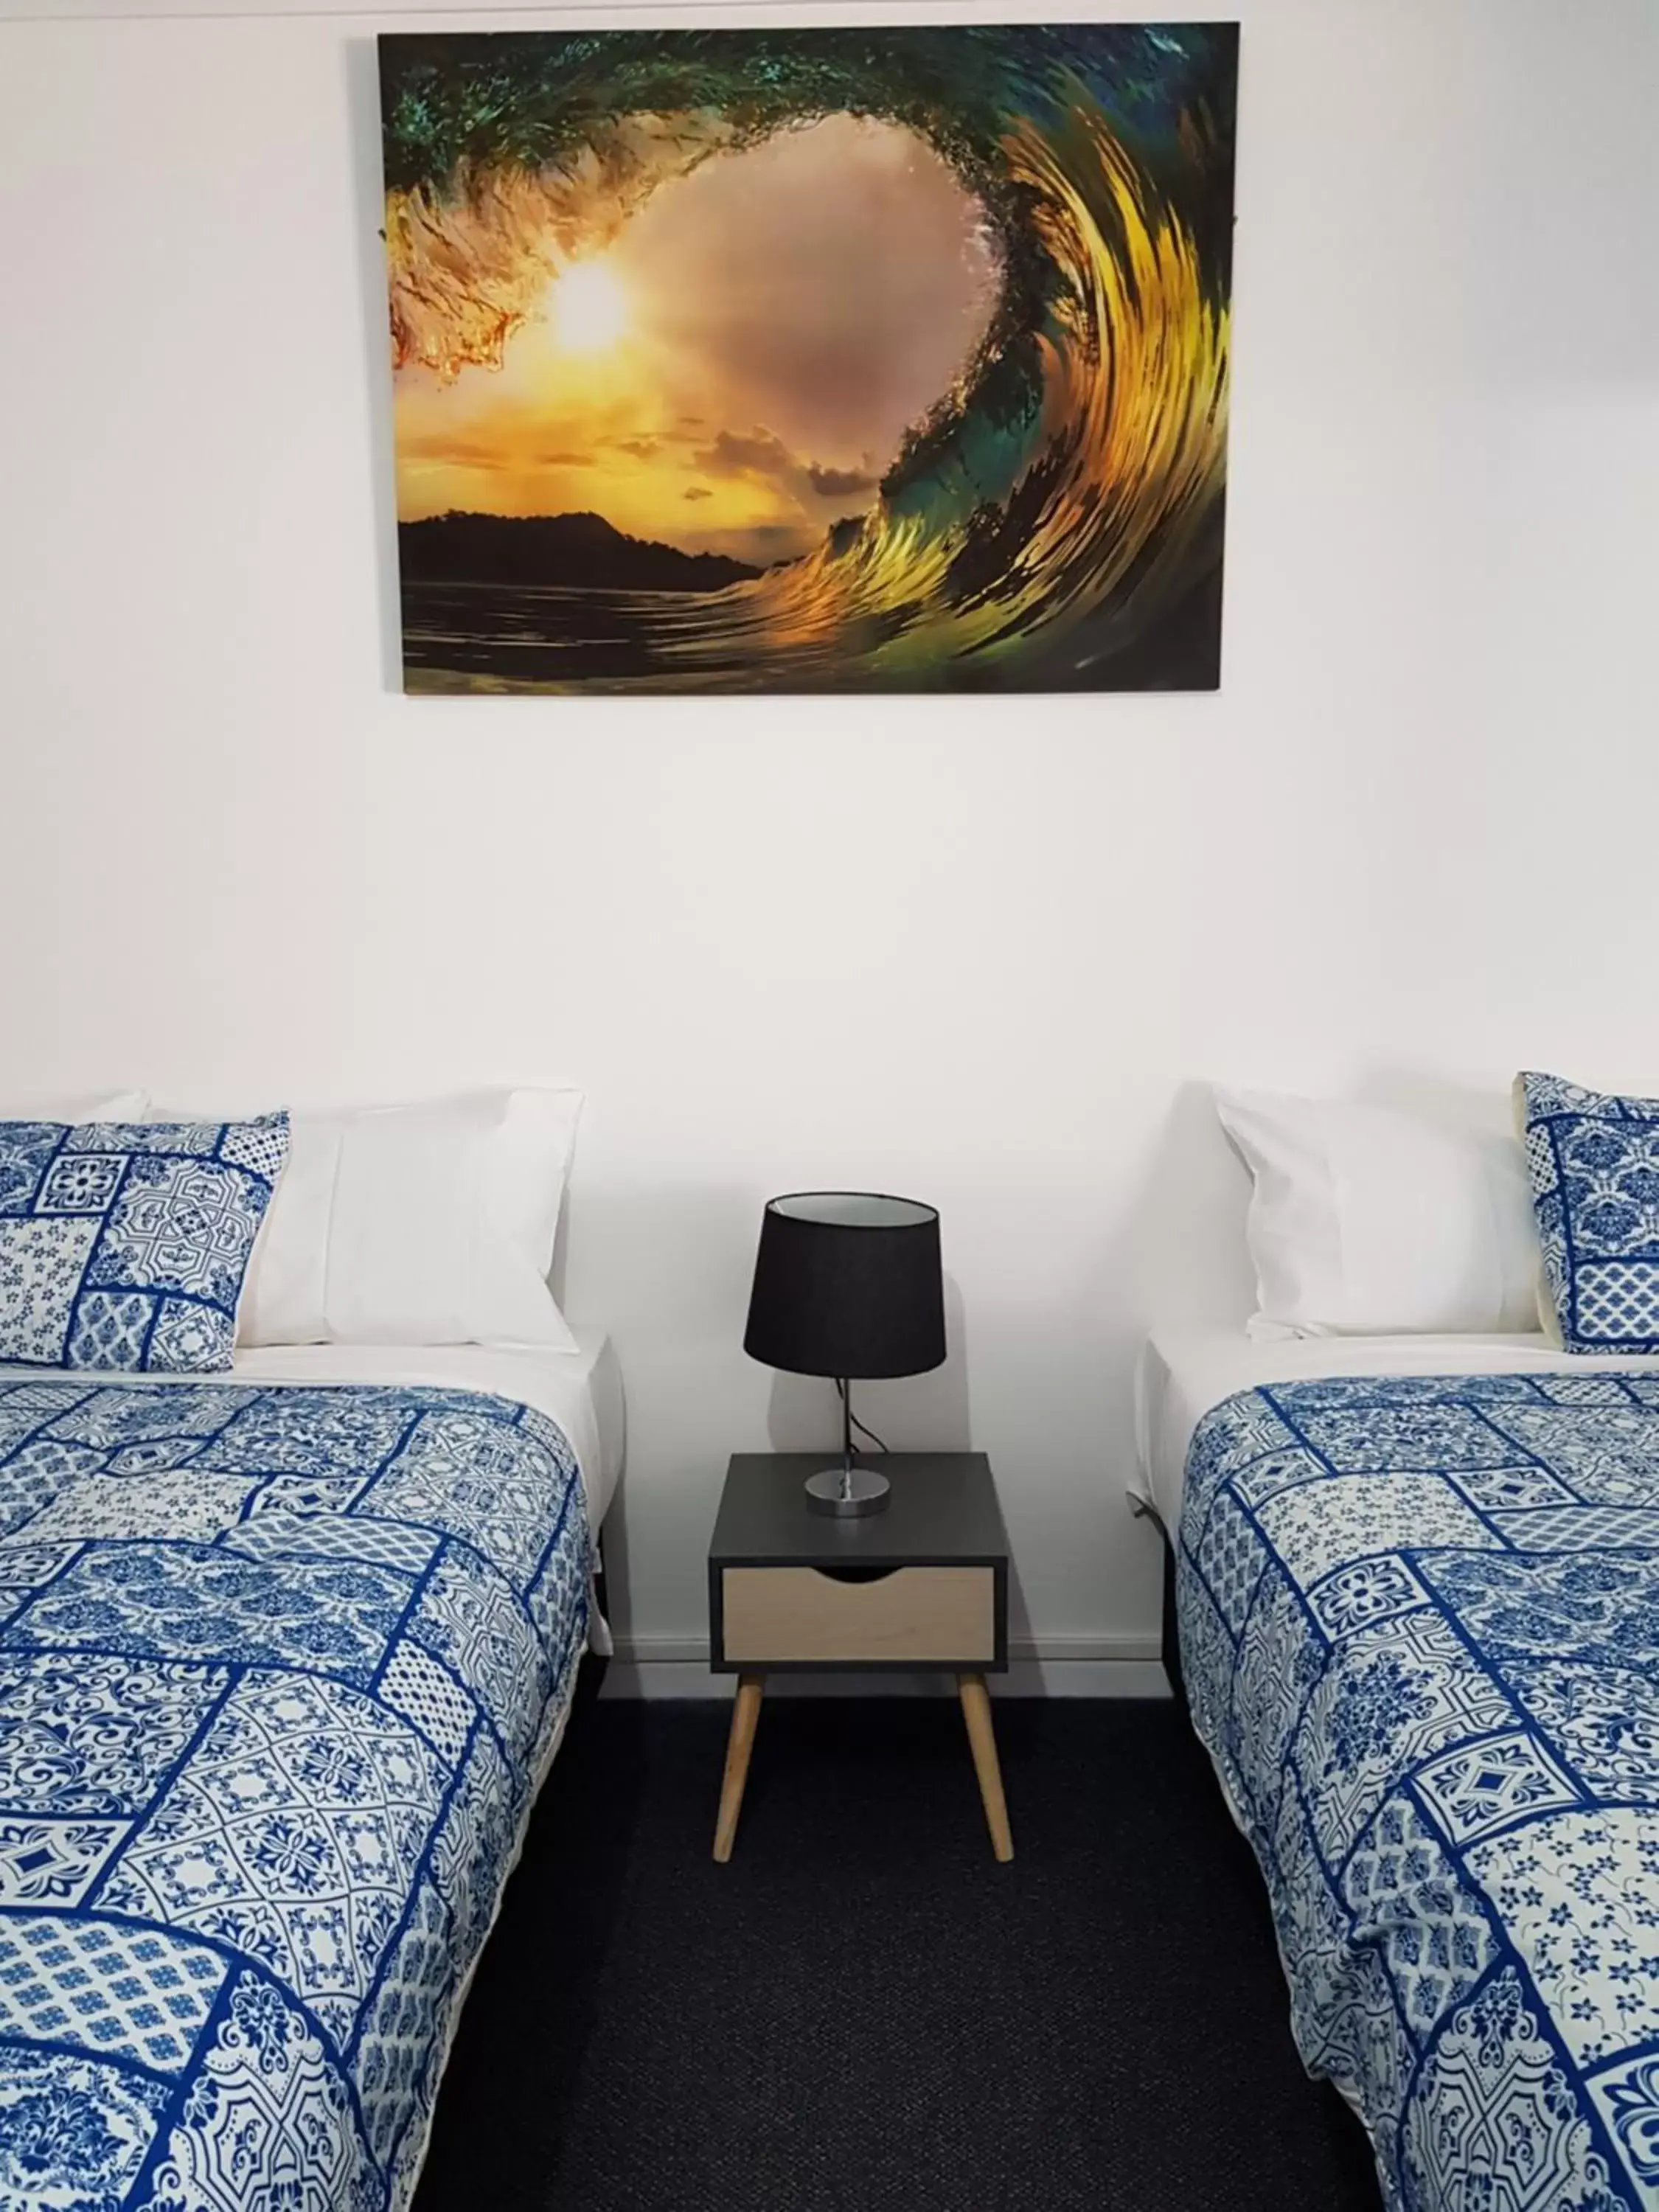 Bed in The Q Motel Rockhampton